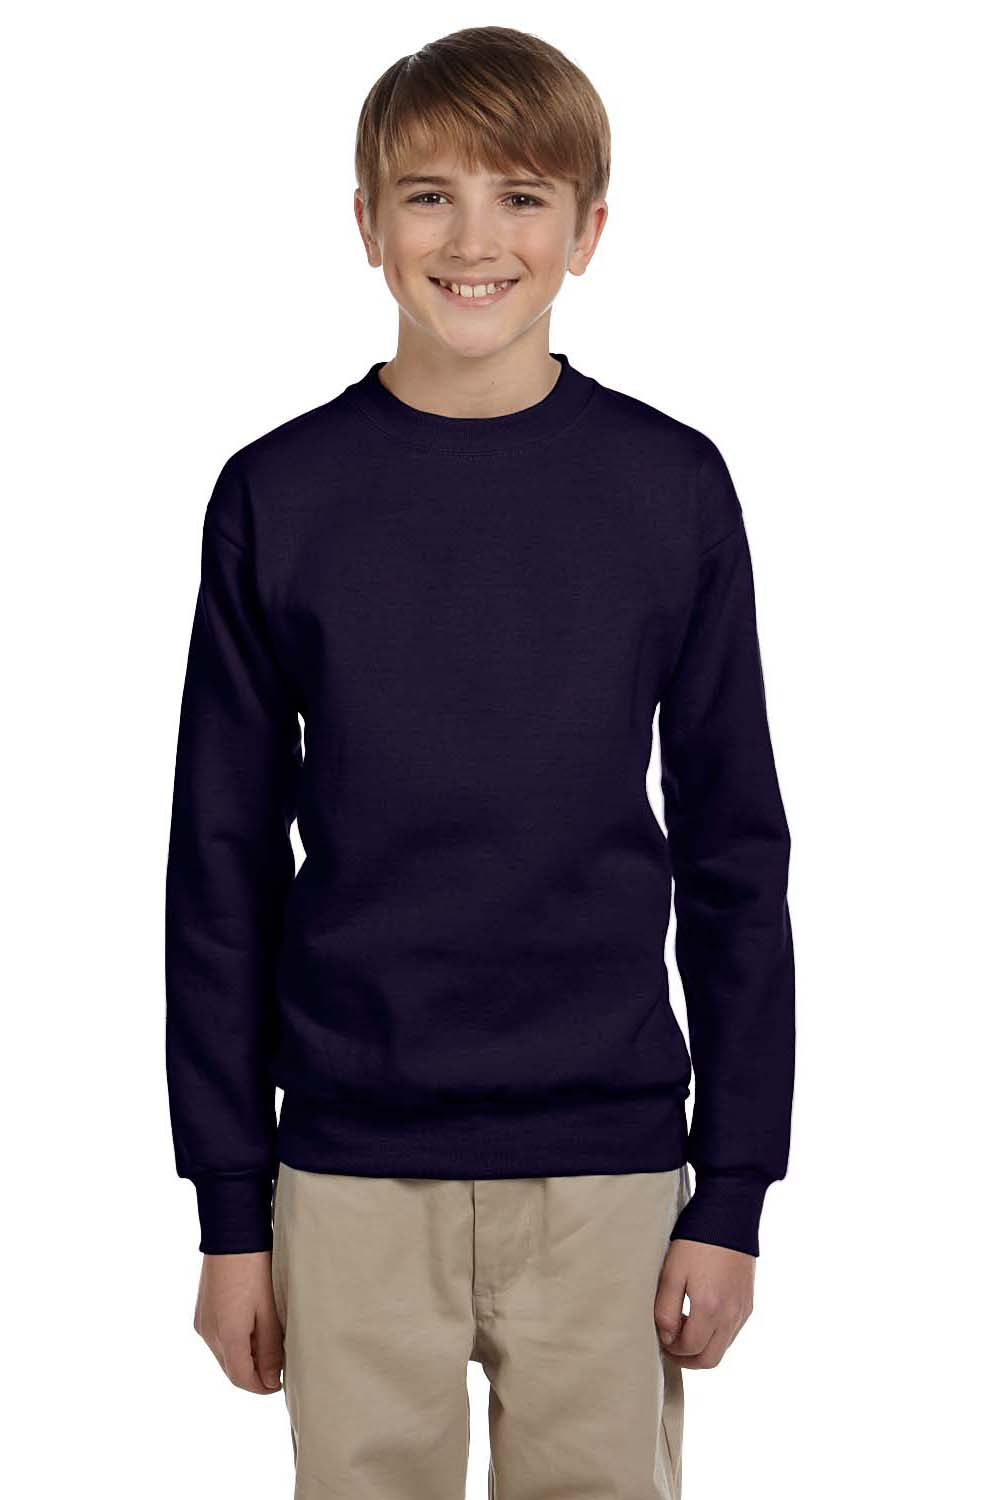 Hanes P360 Youth EcoSmart Print Pro XP Fleece Crewneck Sweatshirt Navy Blue Front